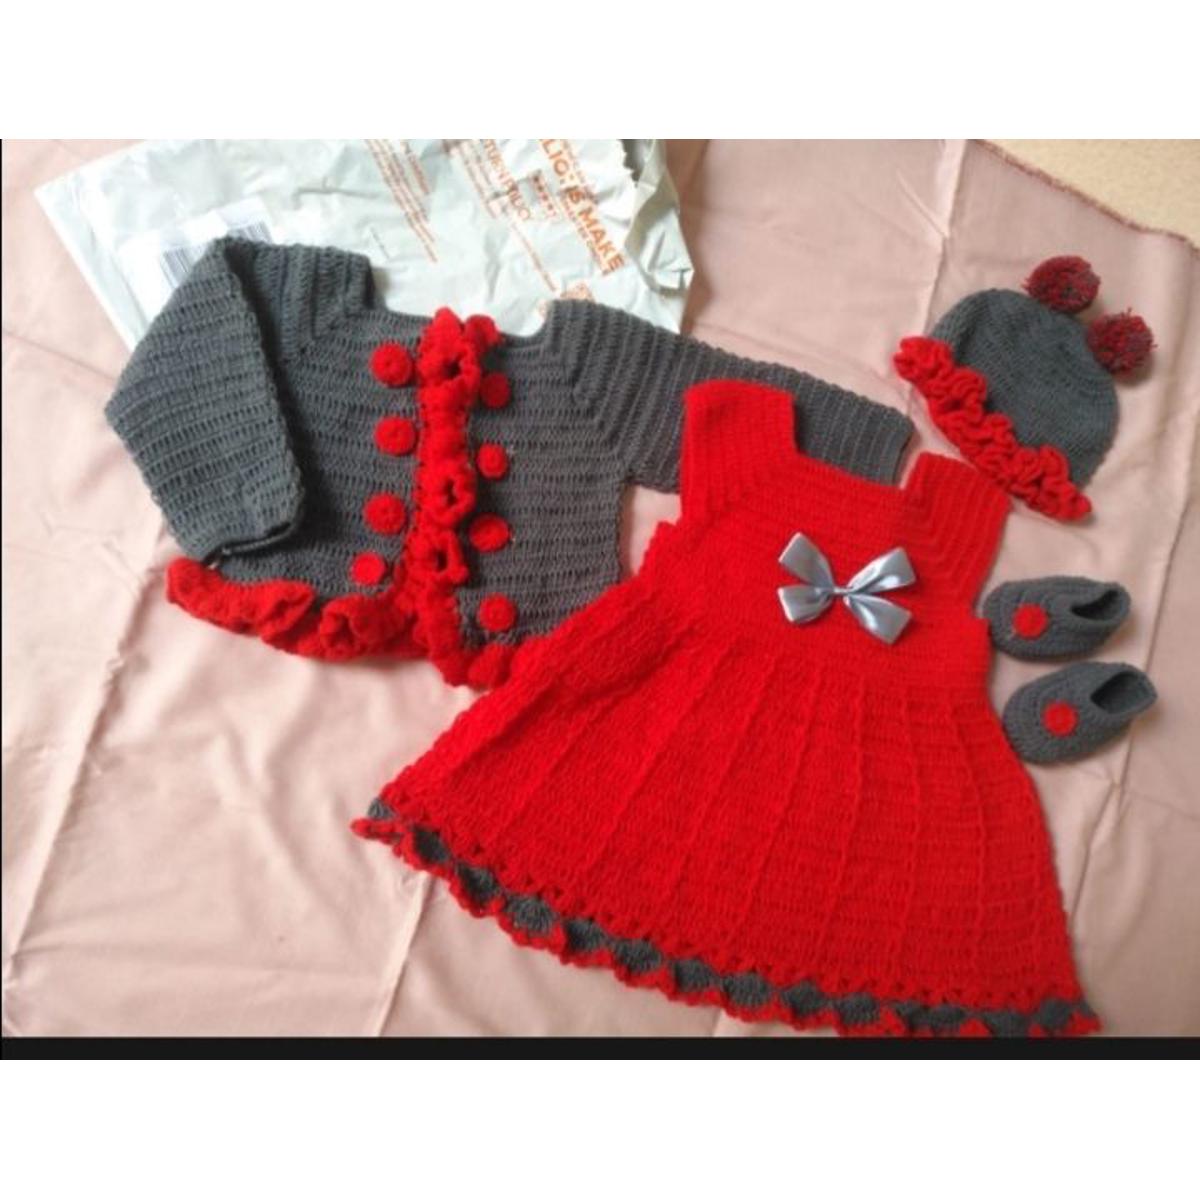 Baby romper knitting pattern  PDF download